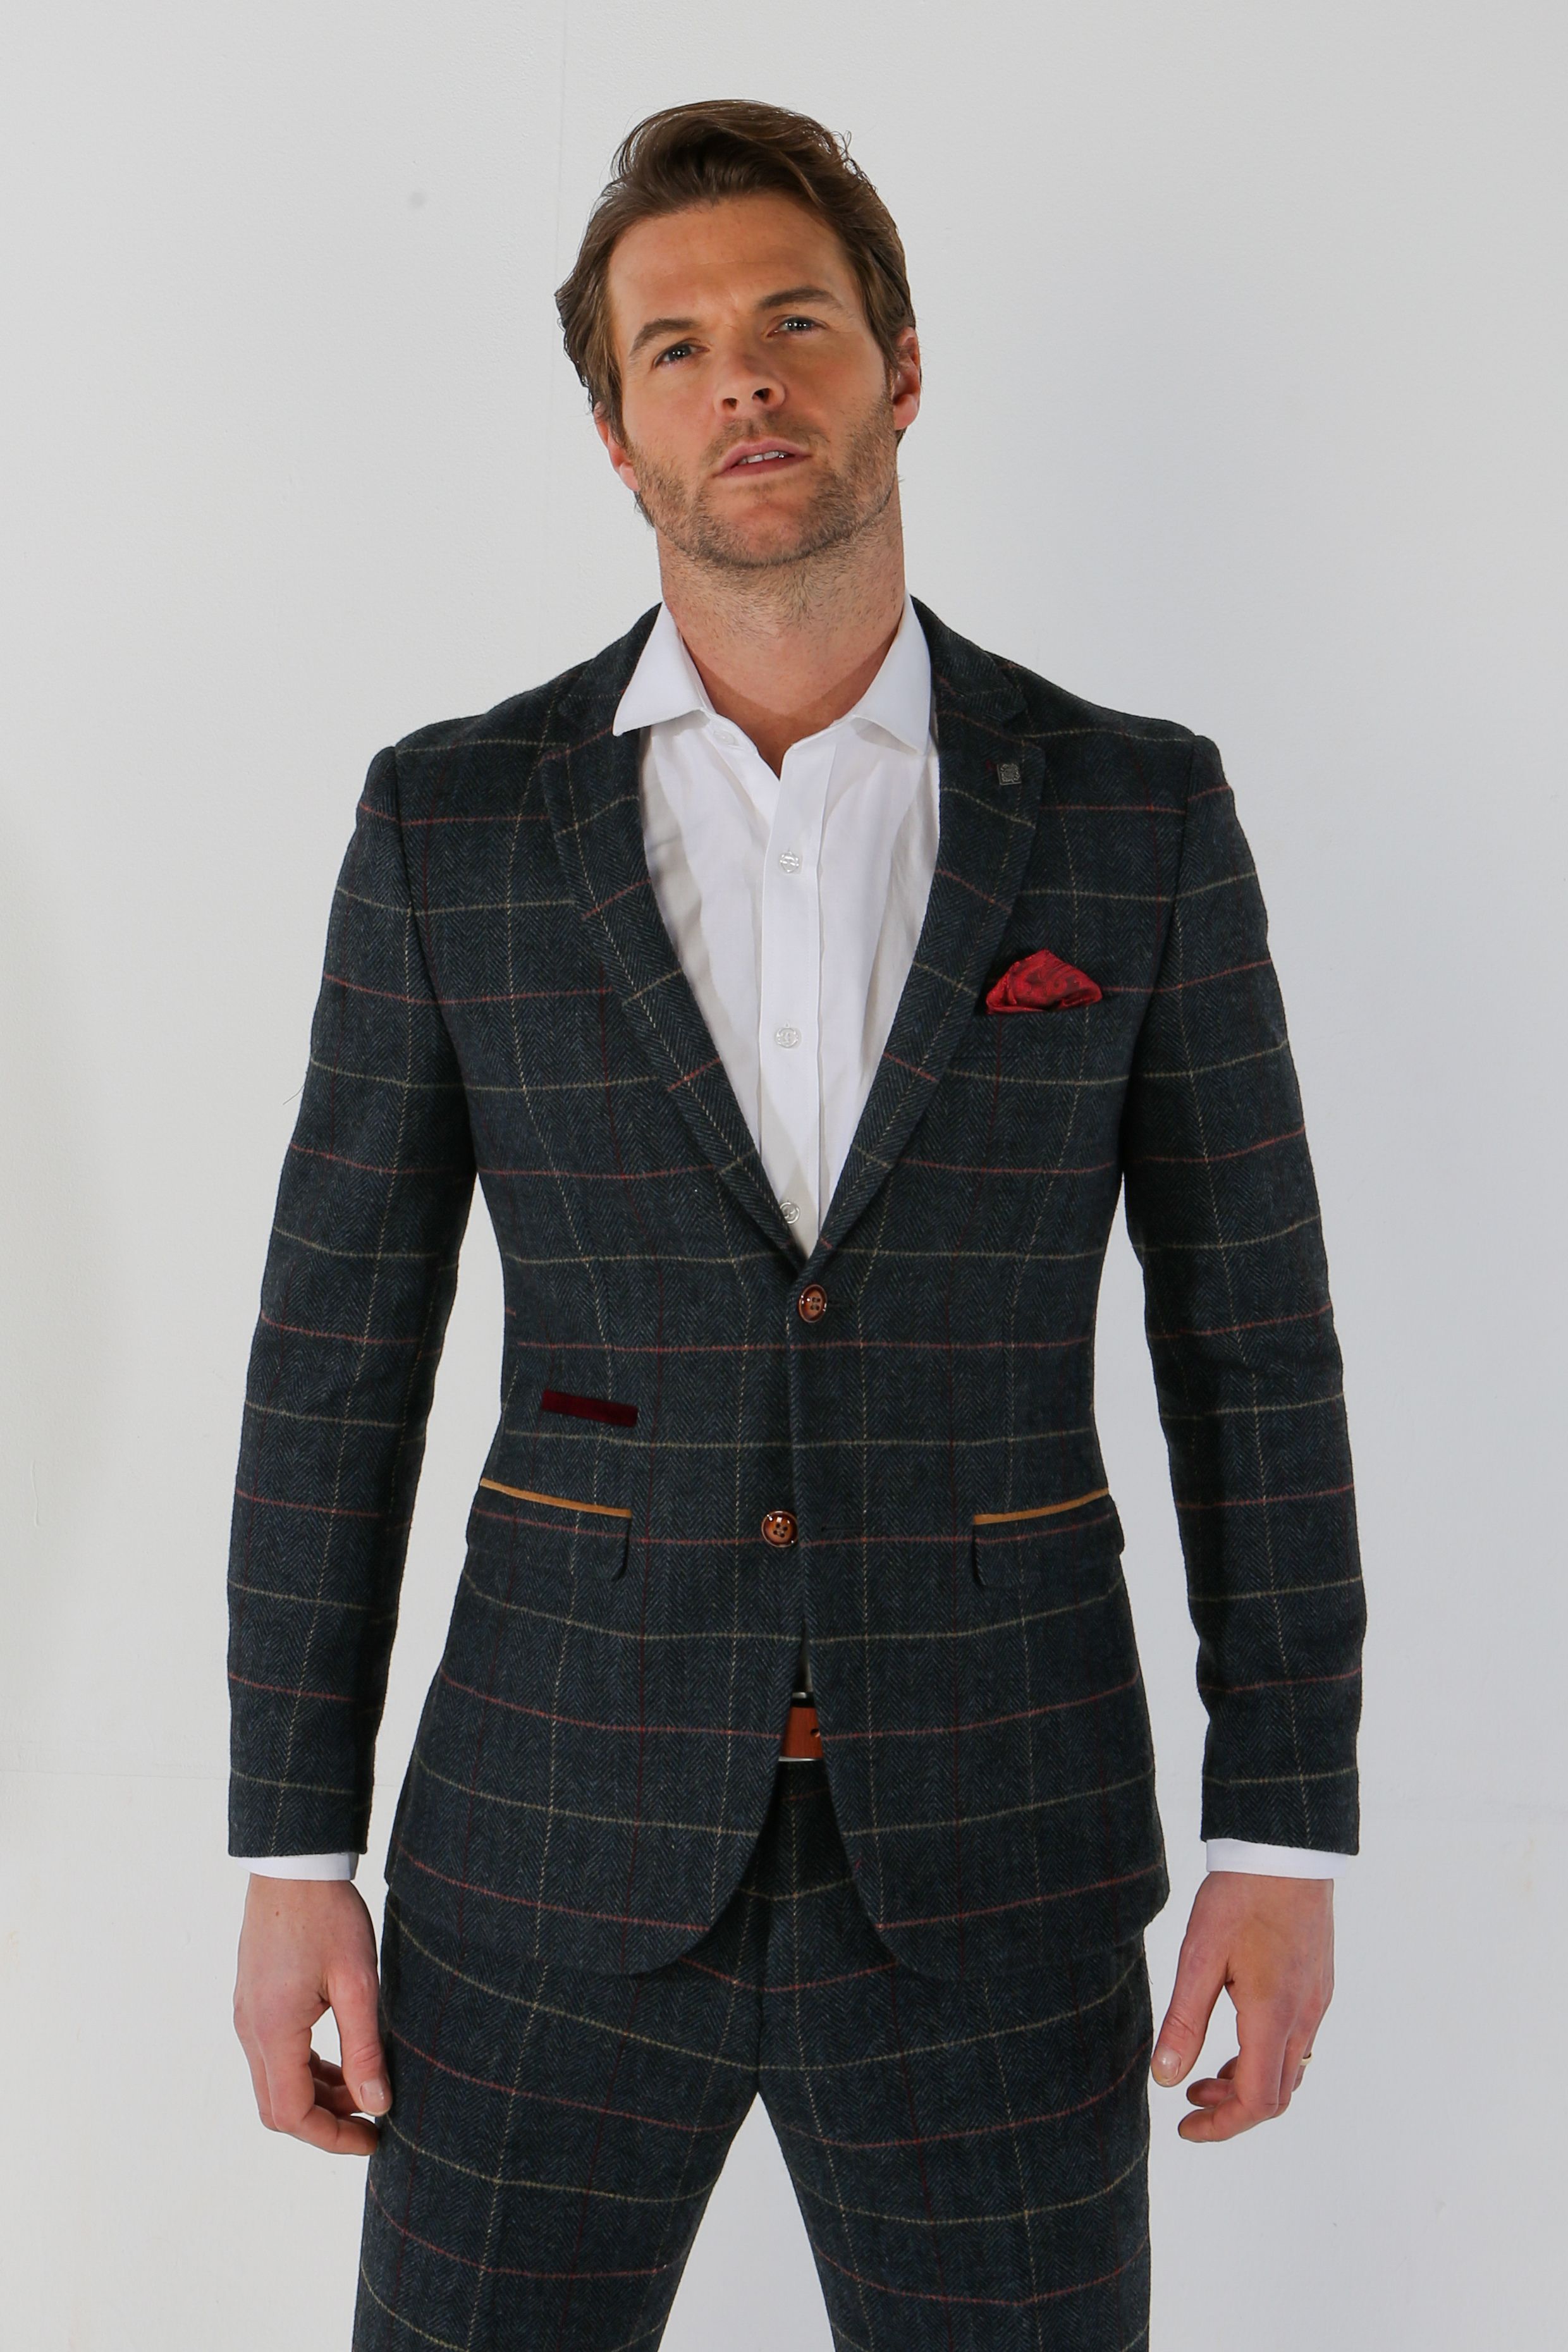 Men's Tweed Check Plaid Navy Suit Jacket - THOMAS